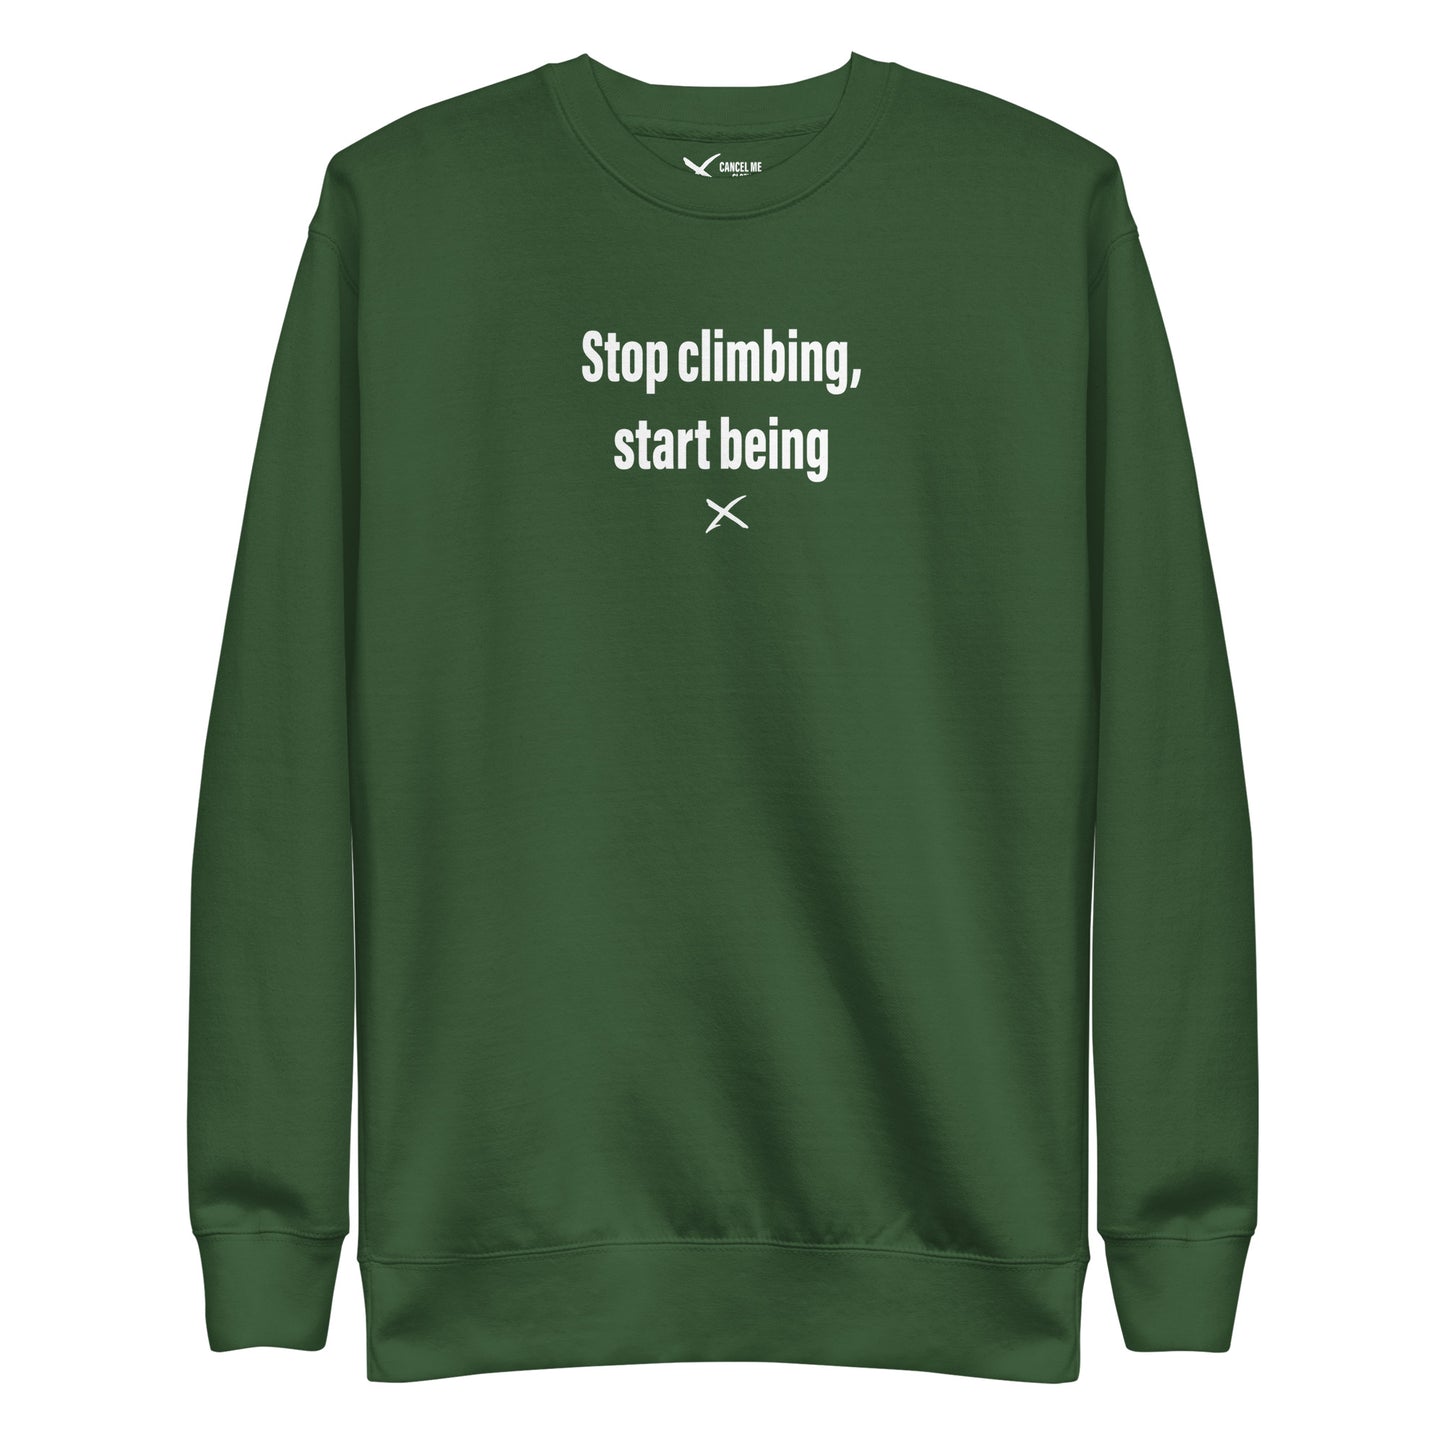 Stop climbing, start being - Sweatshirt